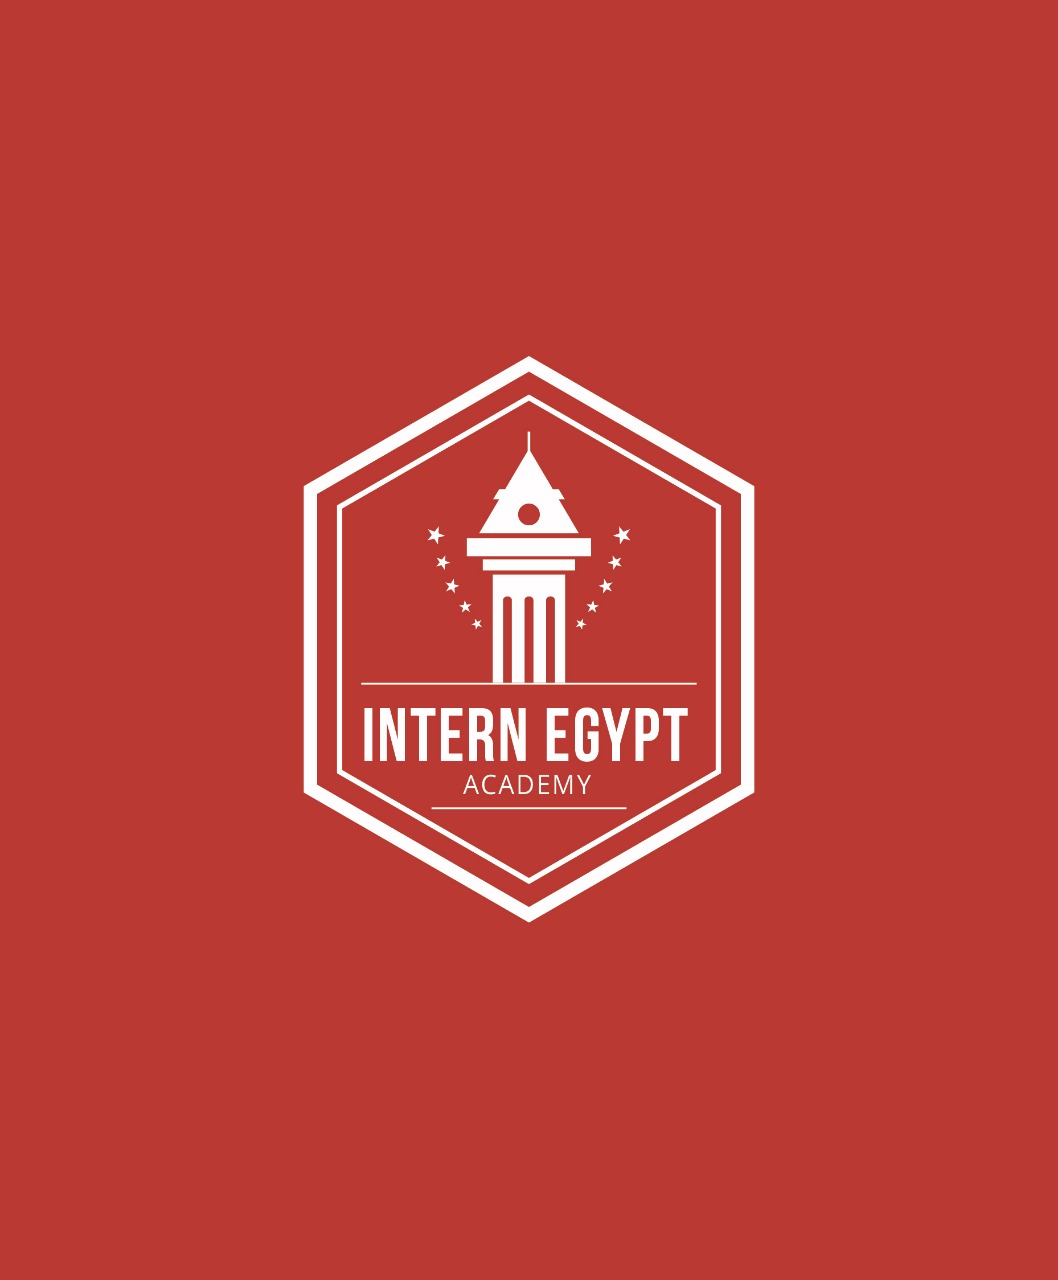 INTERN EGYPT ACADEMY